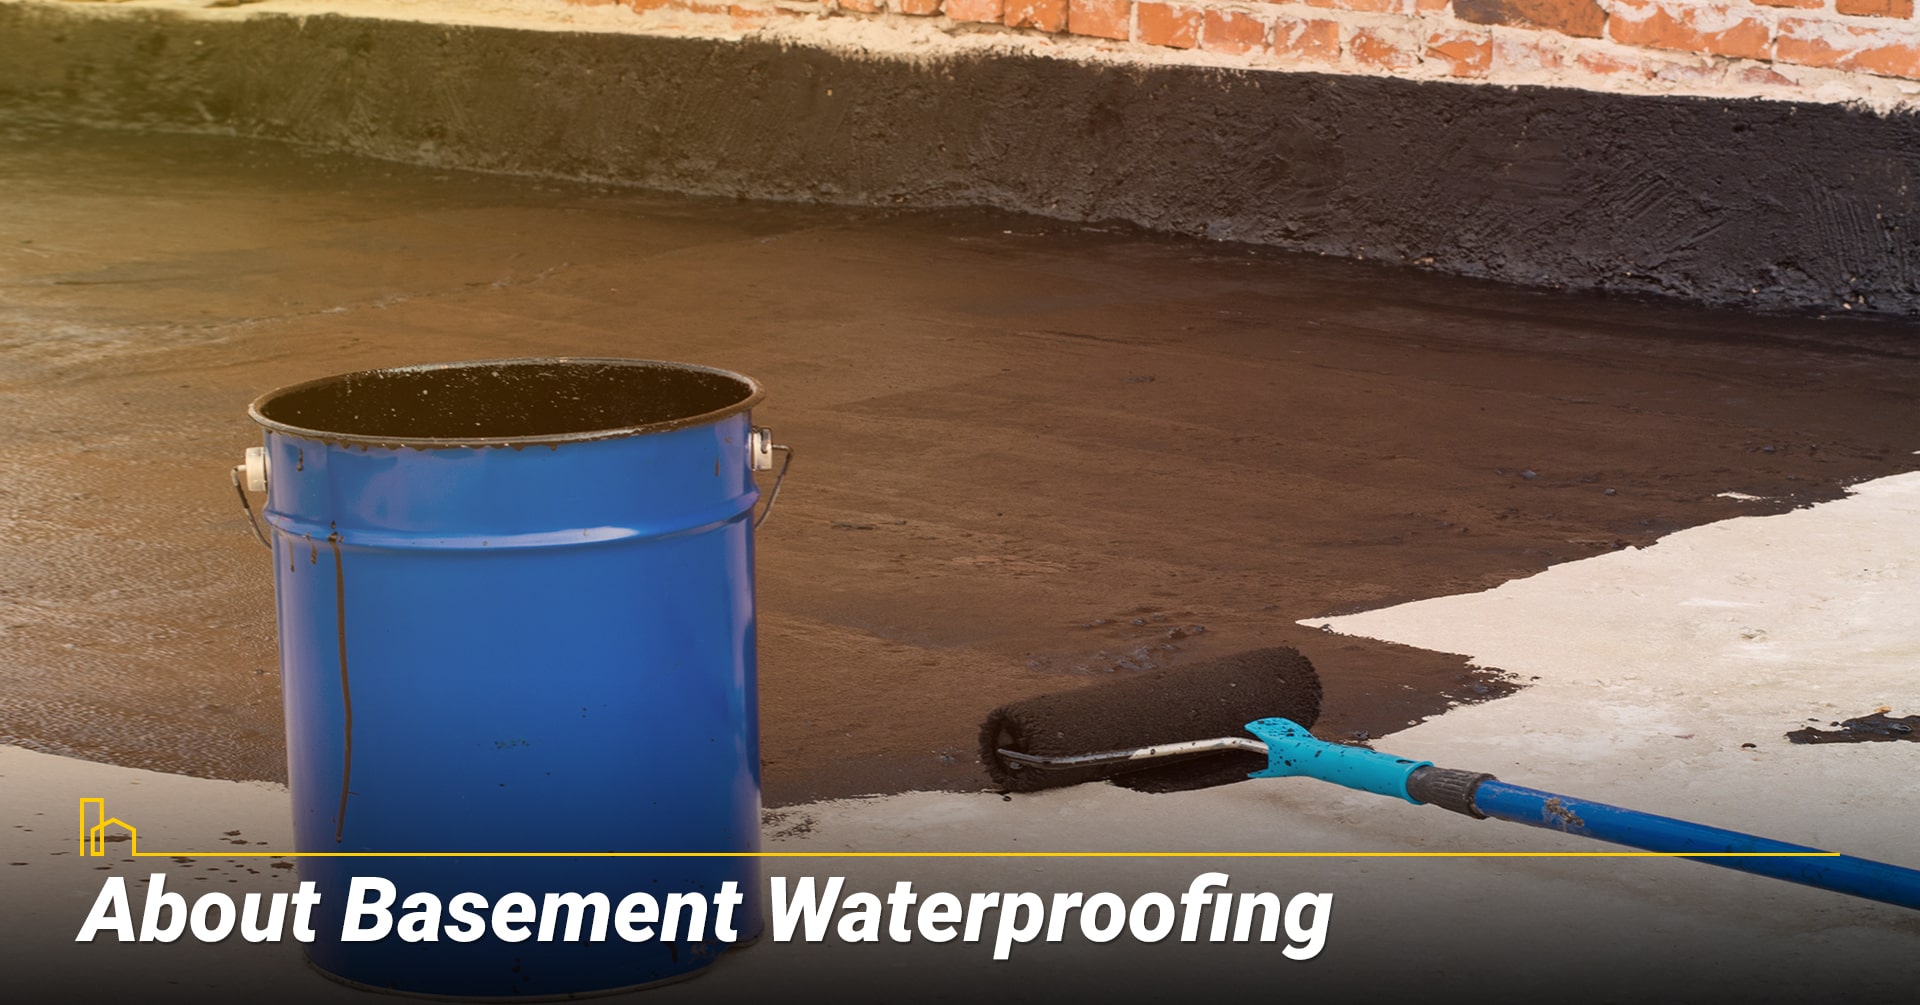 About Basement Waterproofing